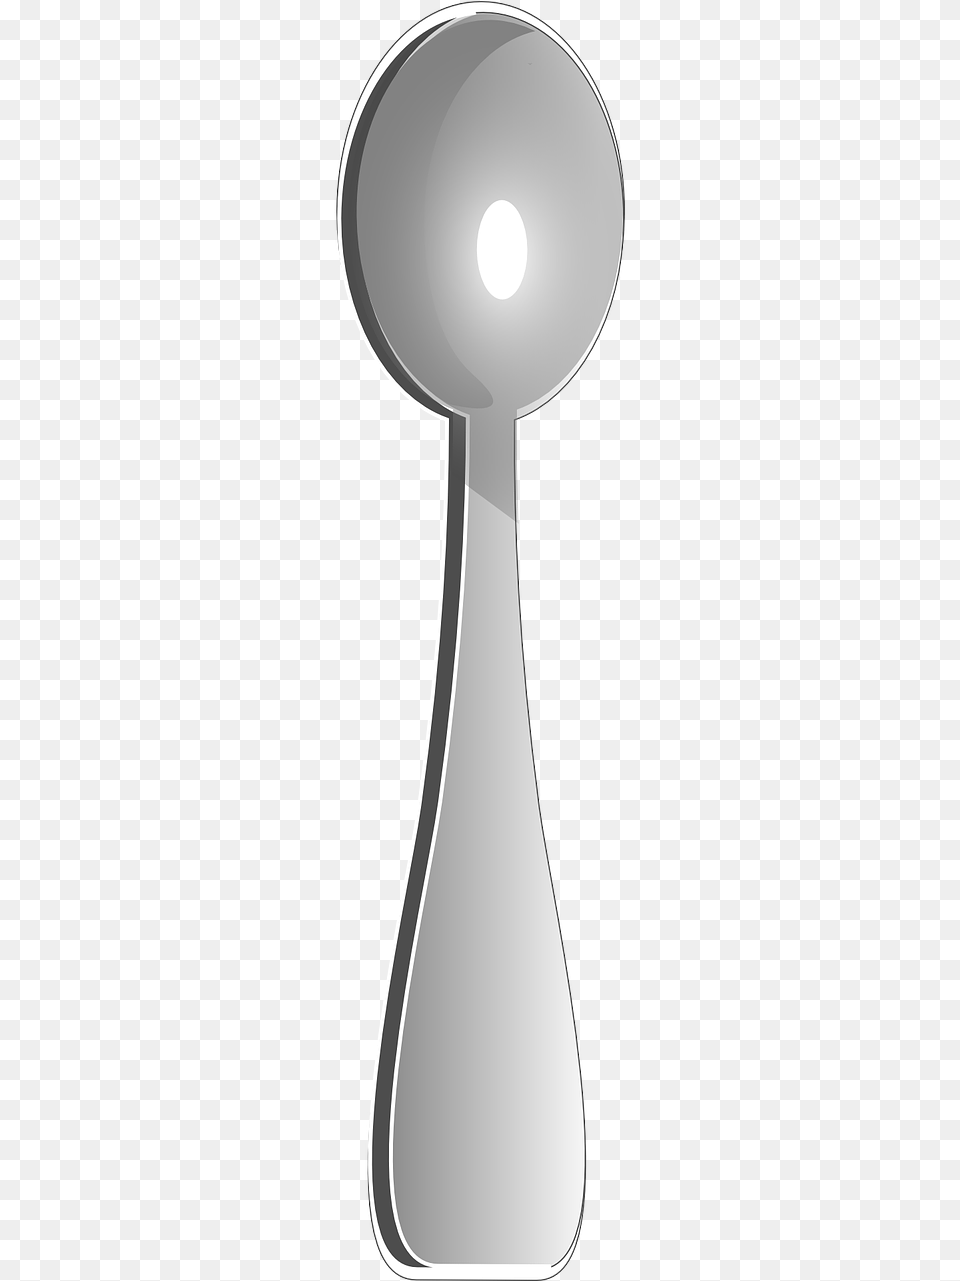 Spoon Cutlery Flatware Picture Metal Spoon Clip Art, Lighting, Lamp Free Png